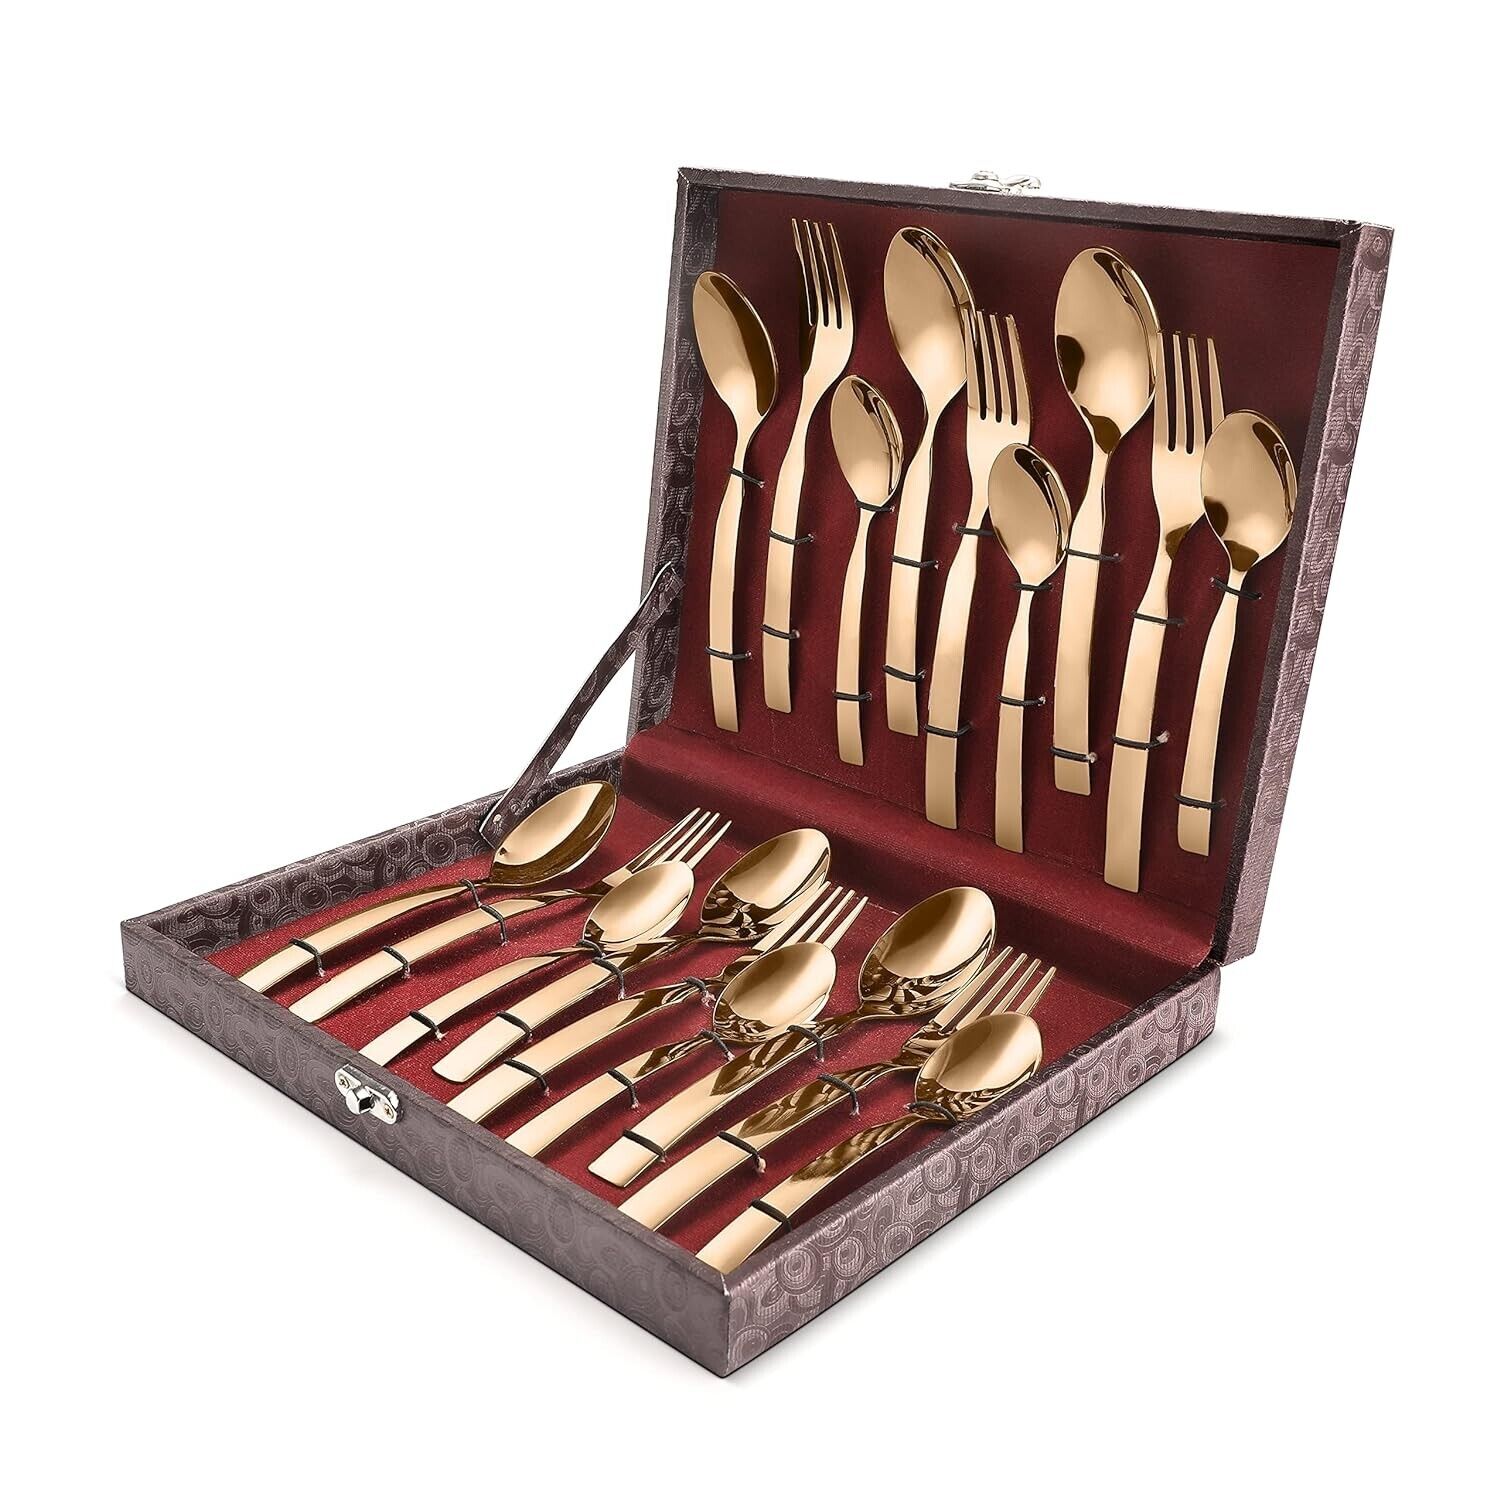 18 pcs Stainless Steel Rose Gold Cutlery  6 Dinner Spoon, 6 Dinner Forks, 6 Teas